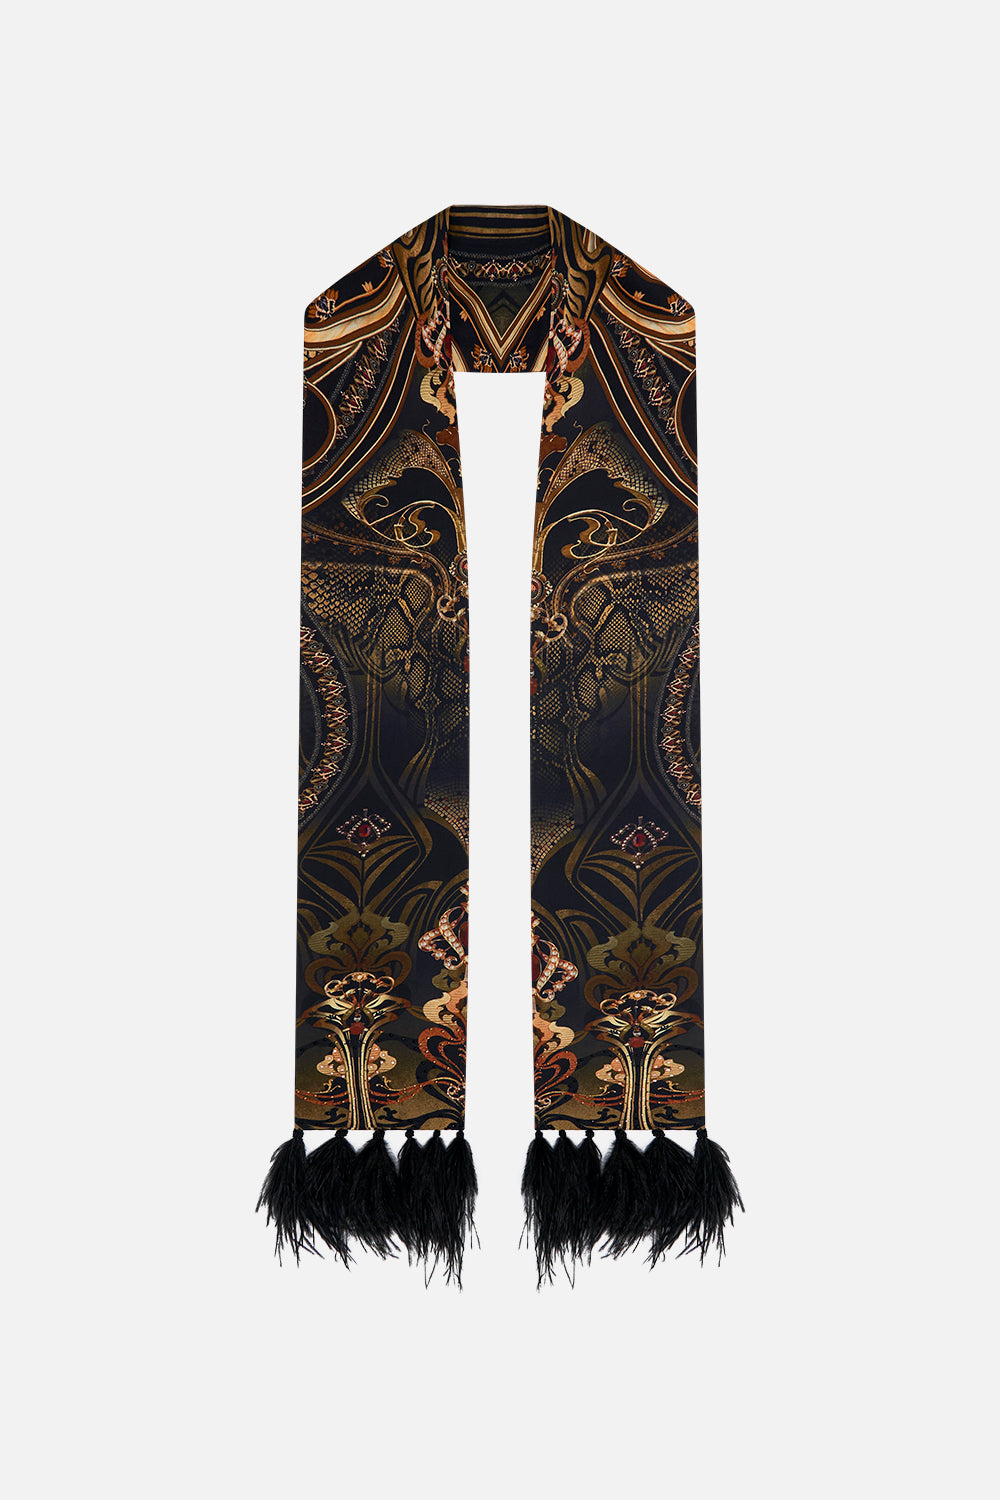 CAMILLA silk scarf in Nouveau Noir print